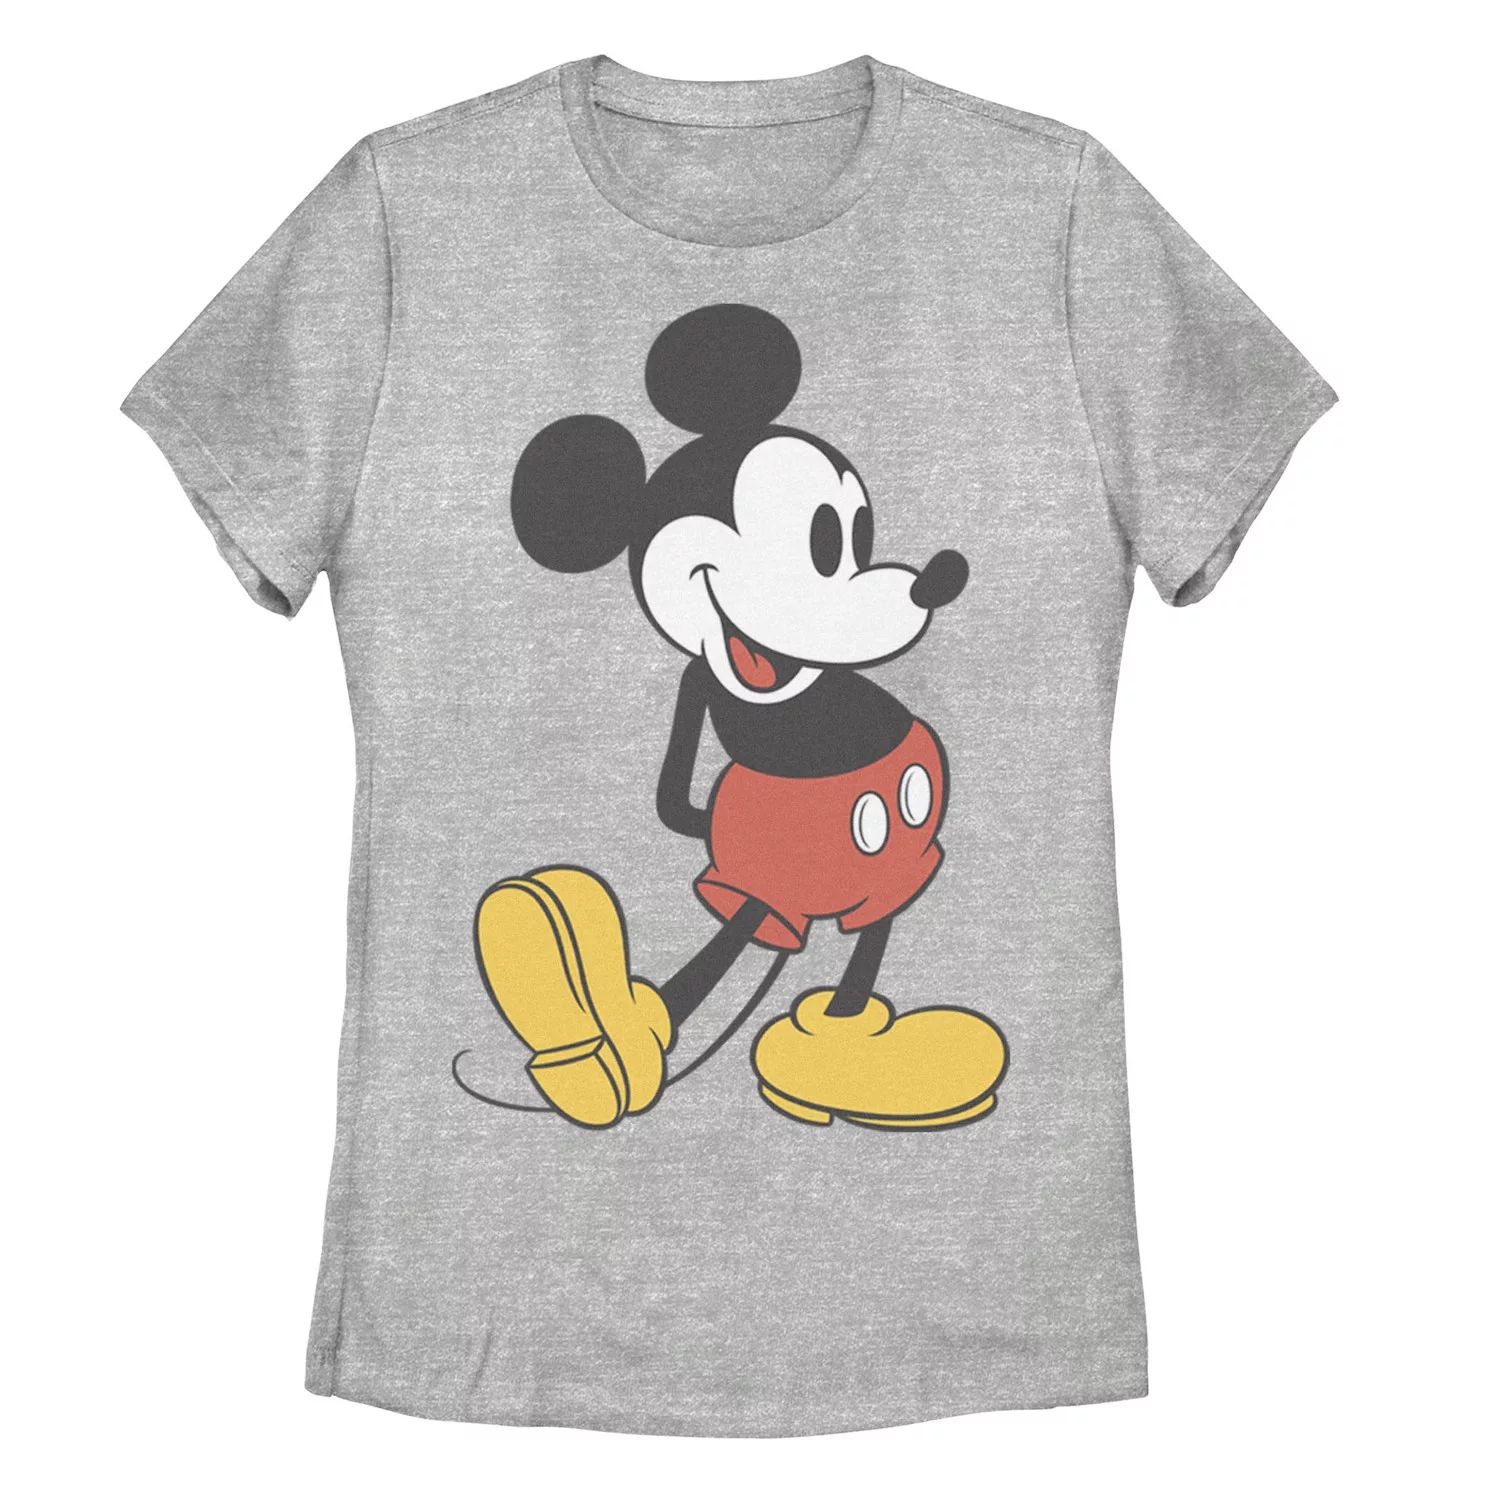 Винтажная футболка для юниоров Disney с Микки Маусом Licensed Character футболка с надписью я спросил с предложением помолвки с микки маусом от disney licensed character